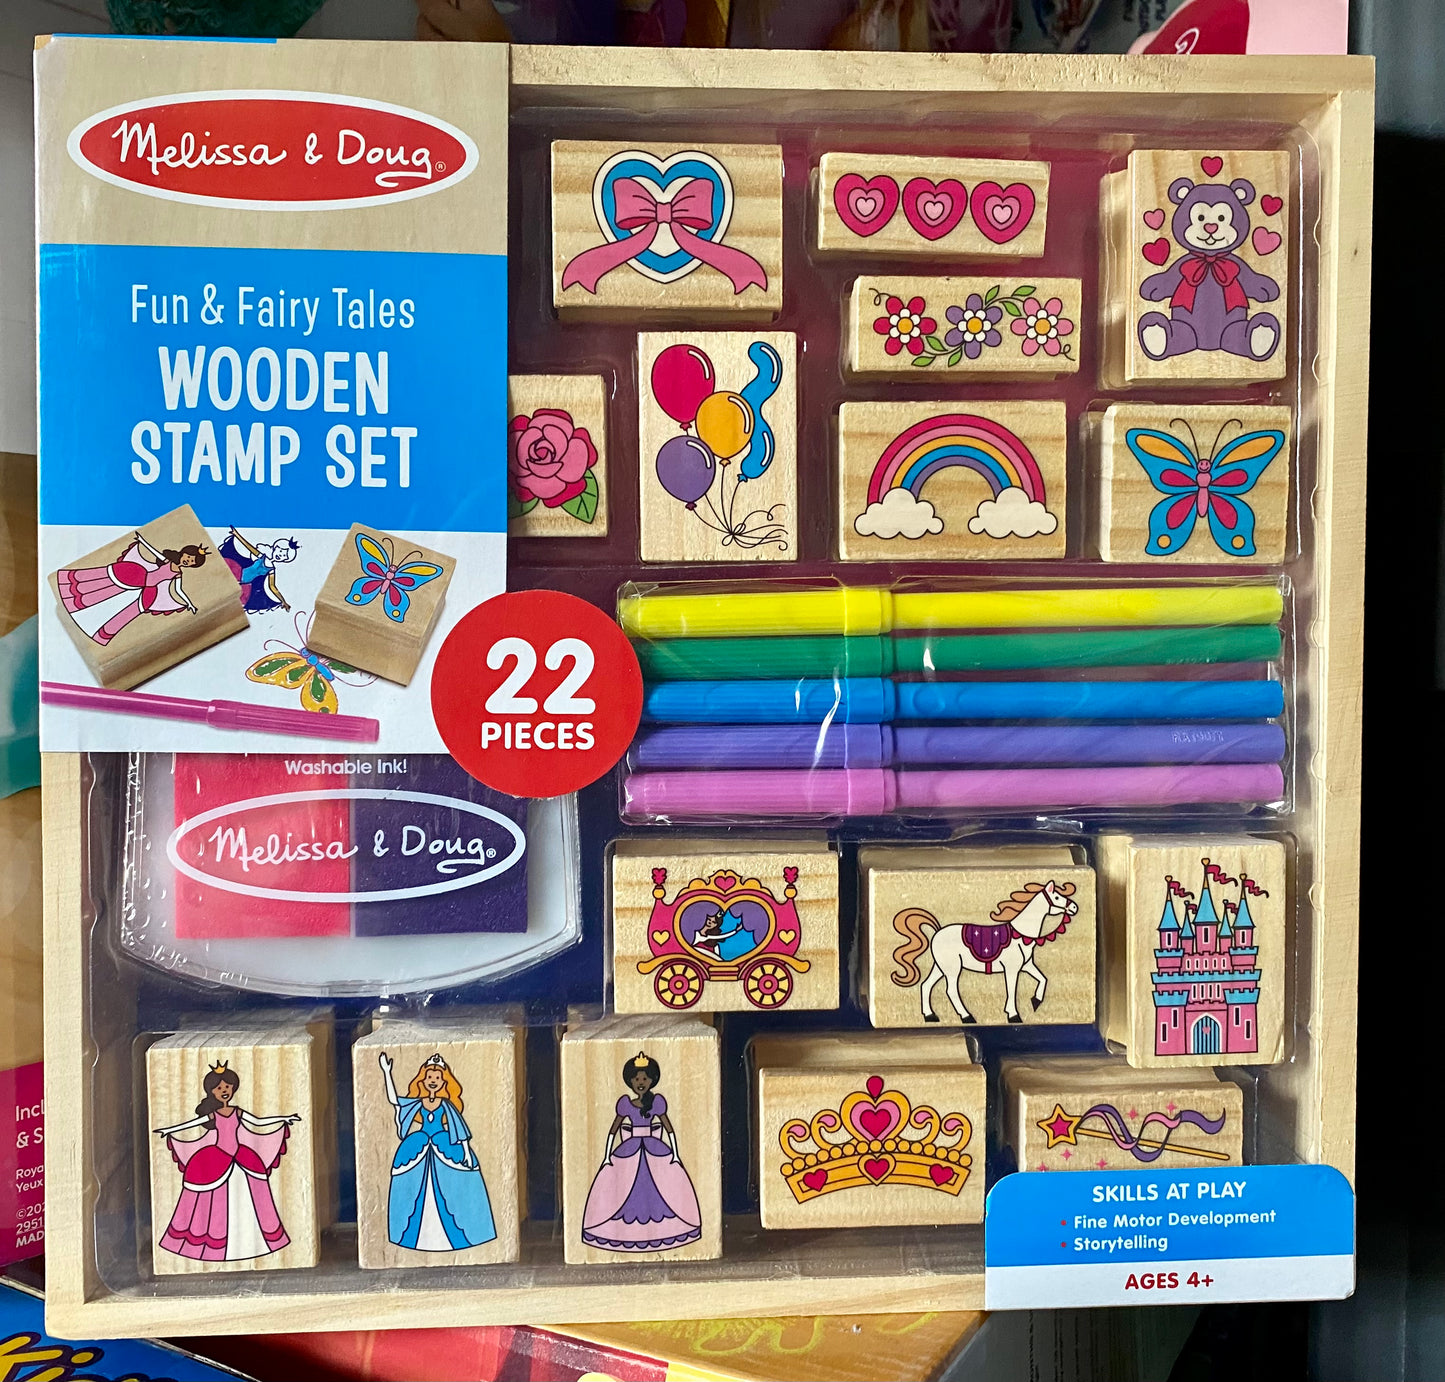 Melissa & Doug Fun & Fairy Tales Wooden Stamp Set